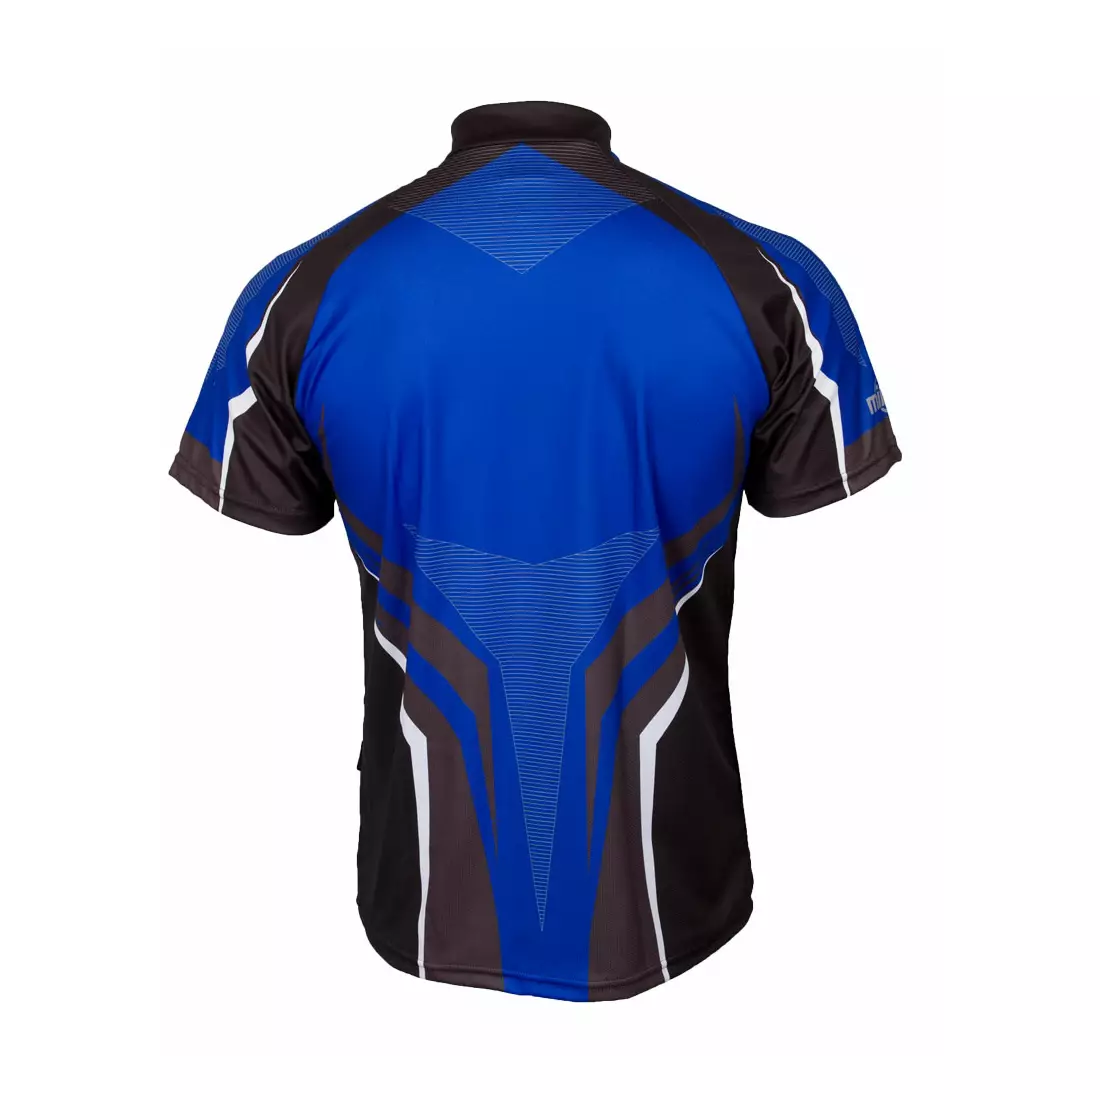 MikeSPORT DESIGN RAVO MTB men's cycling jersey, black and blue